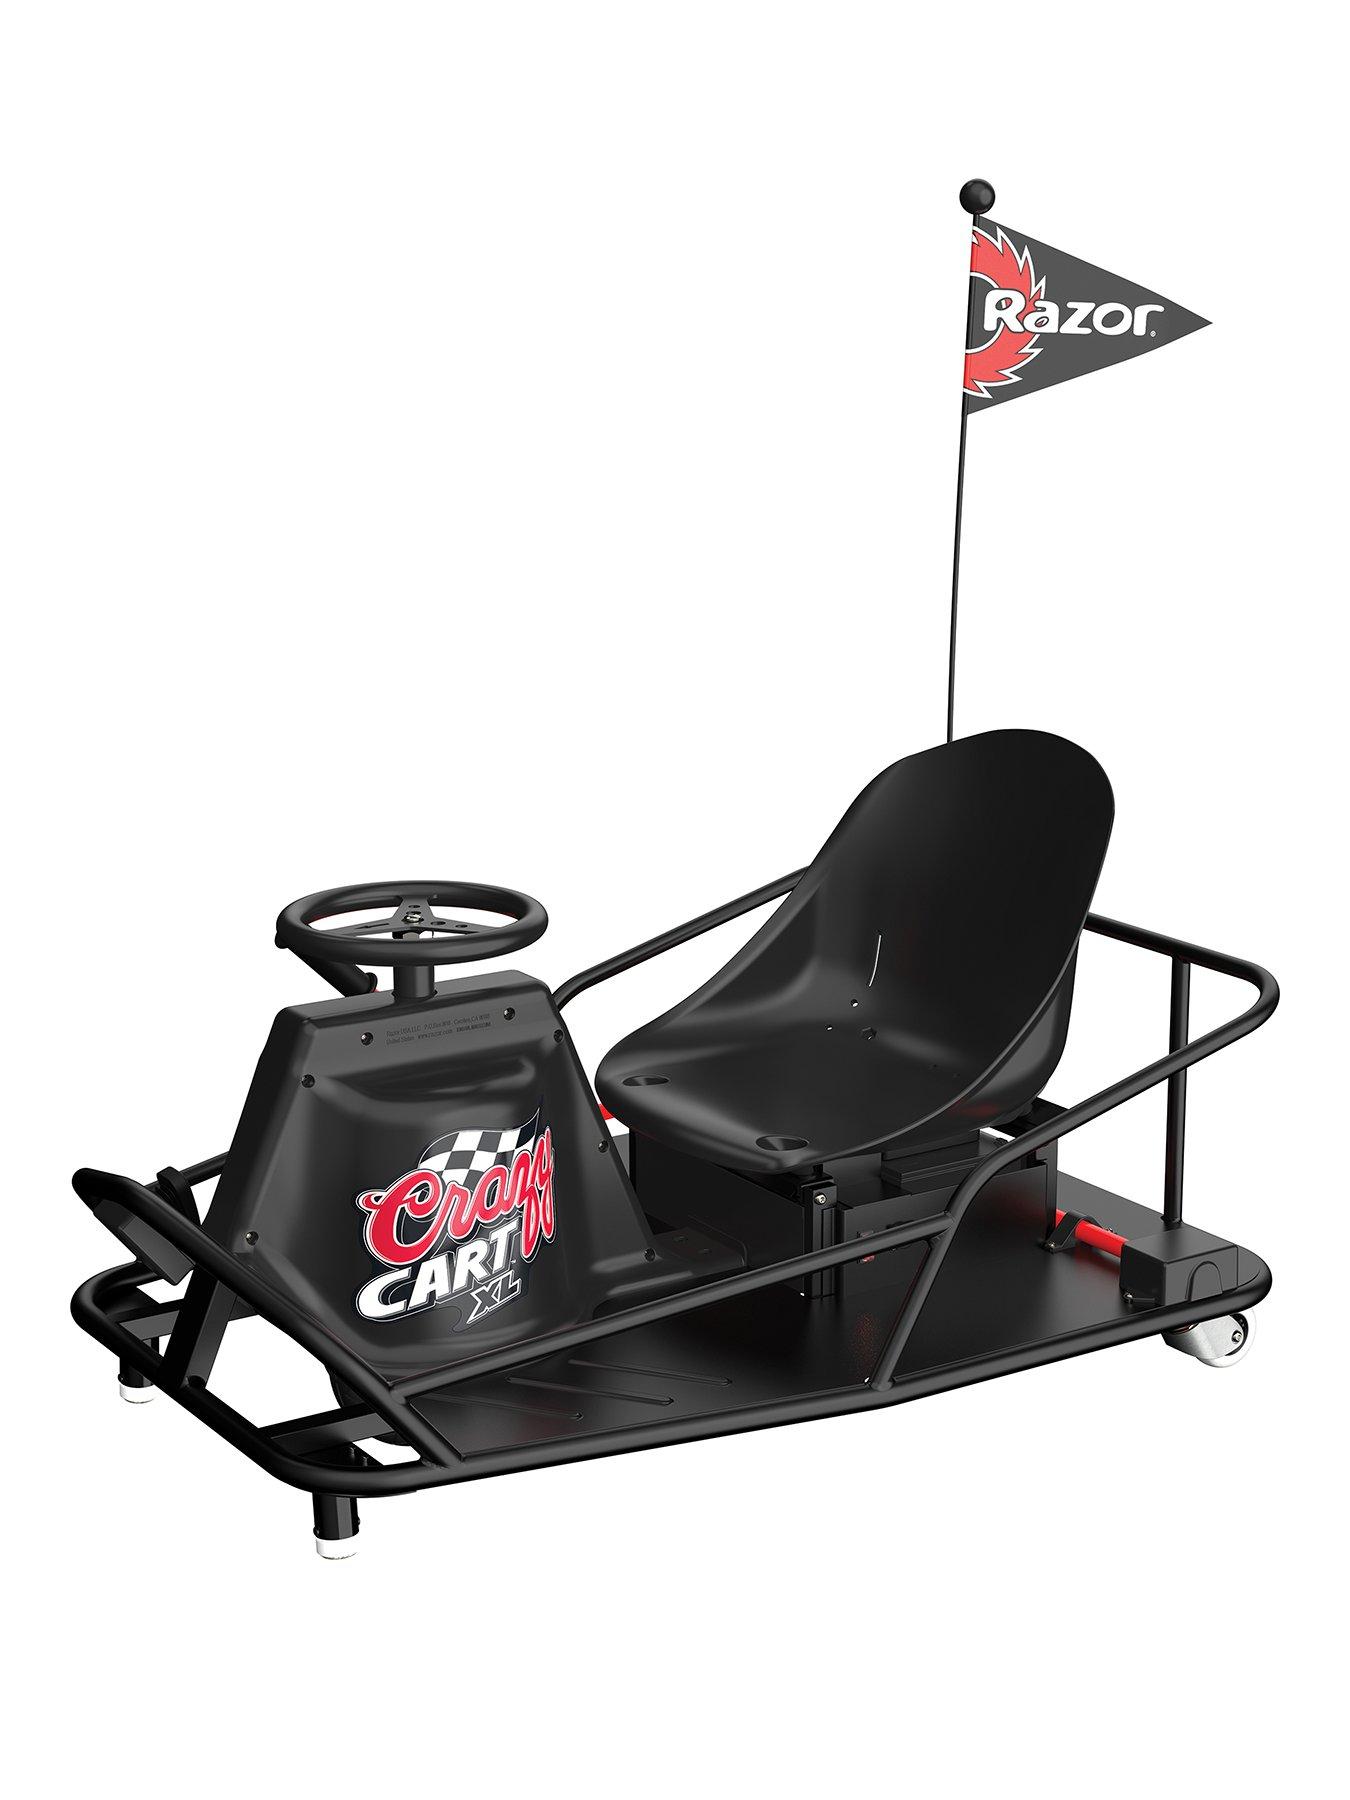 Razor Crazy Cart Xl - Adult Electric Go Kart, 16+ - Black